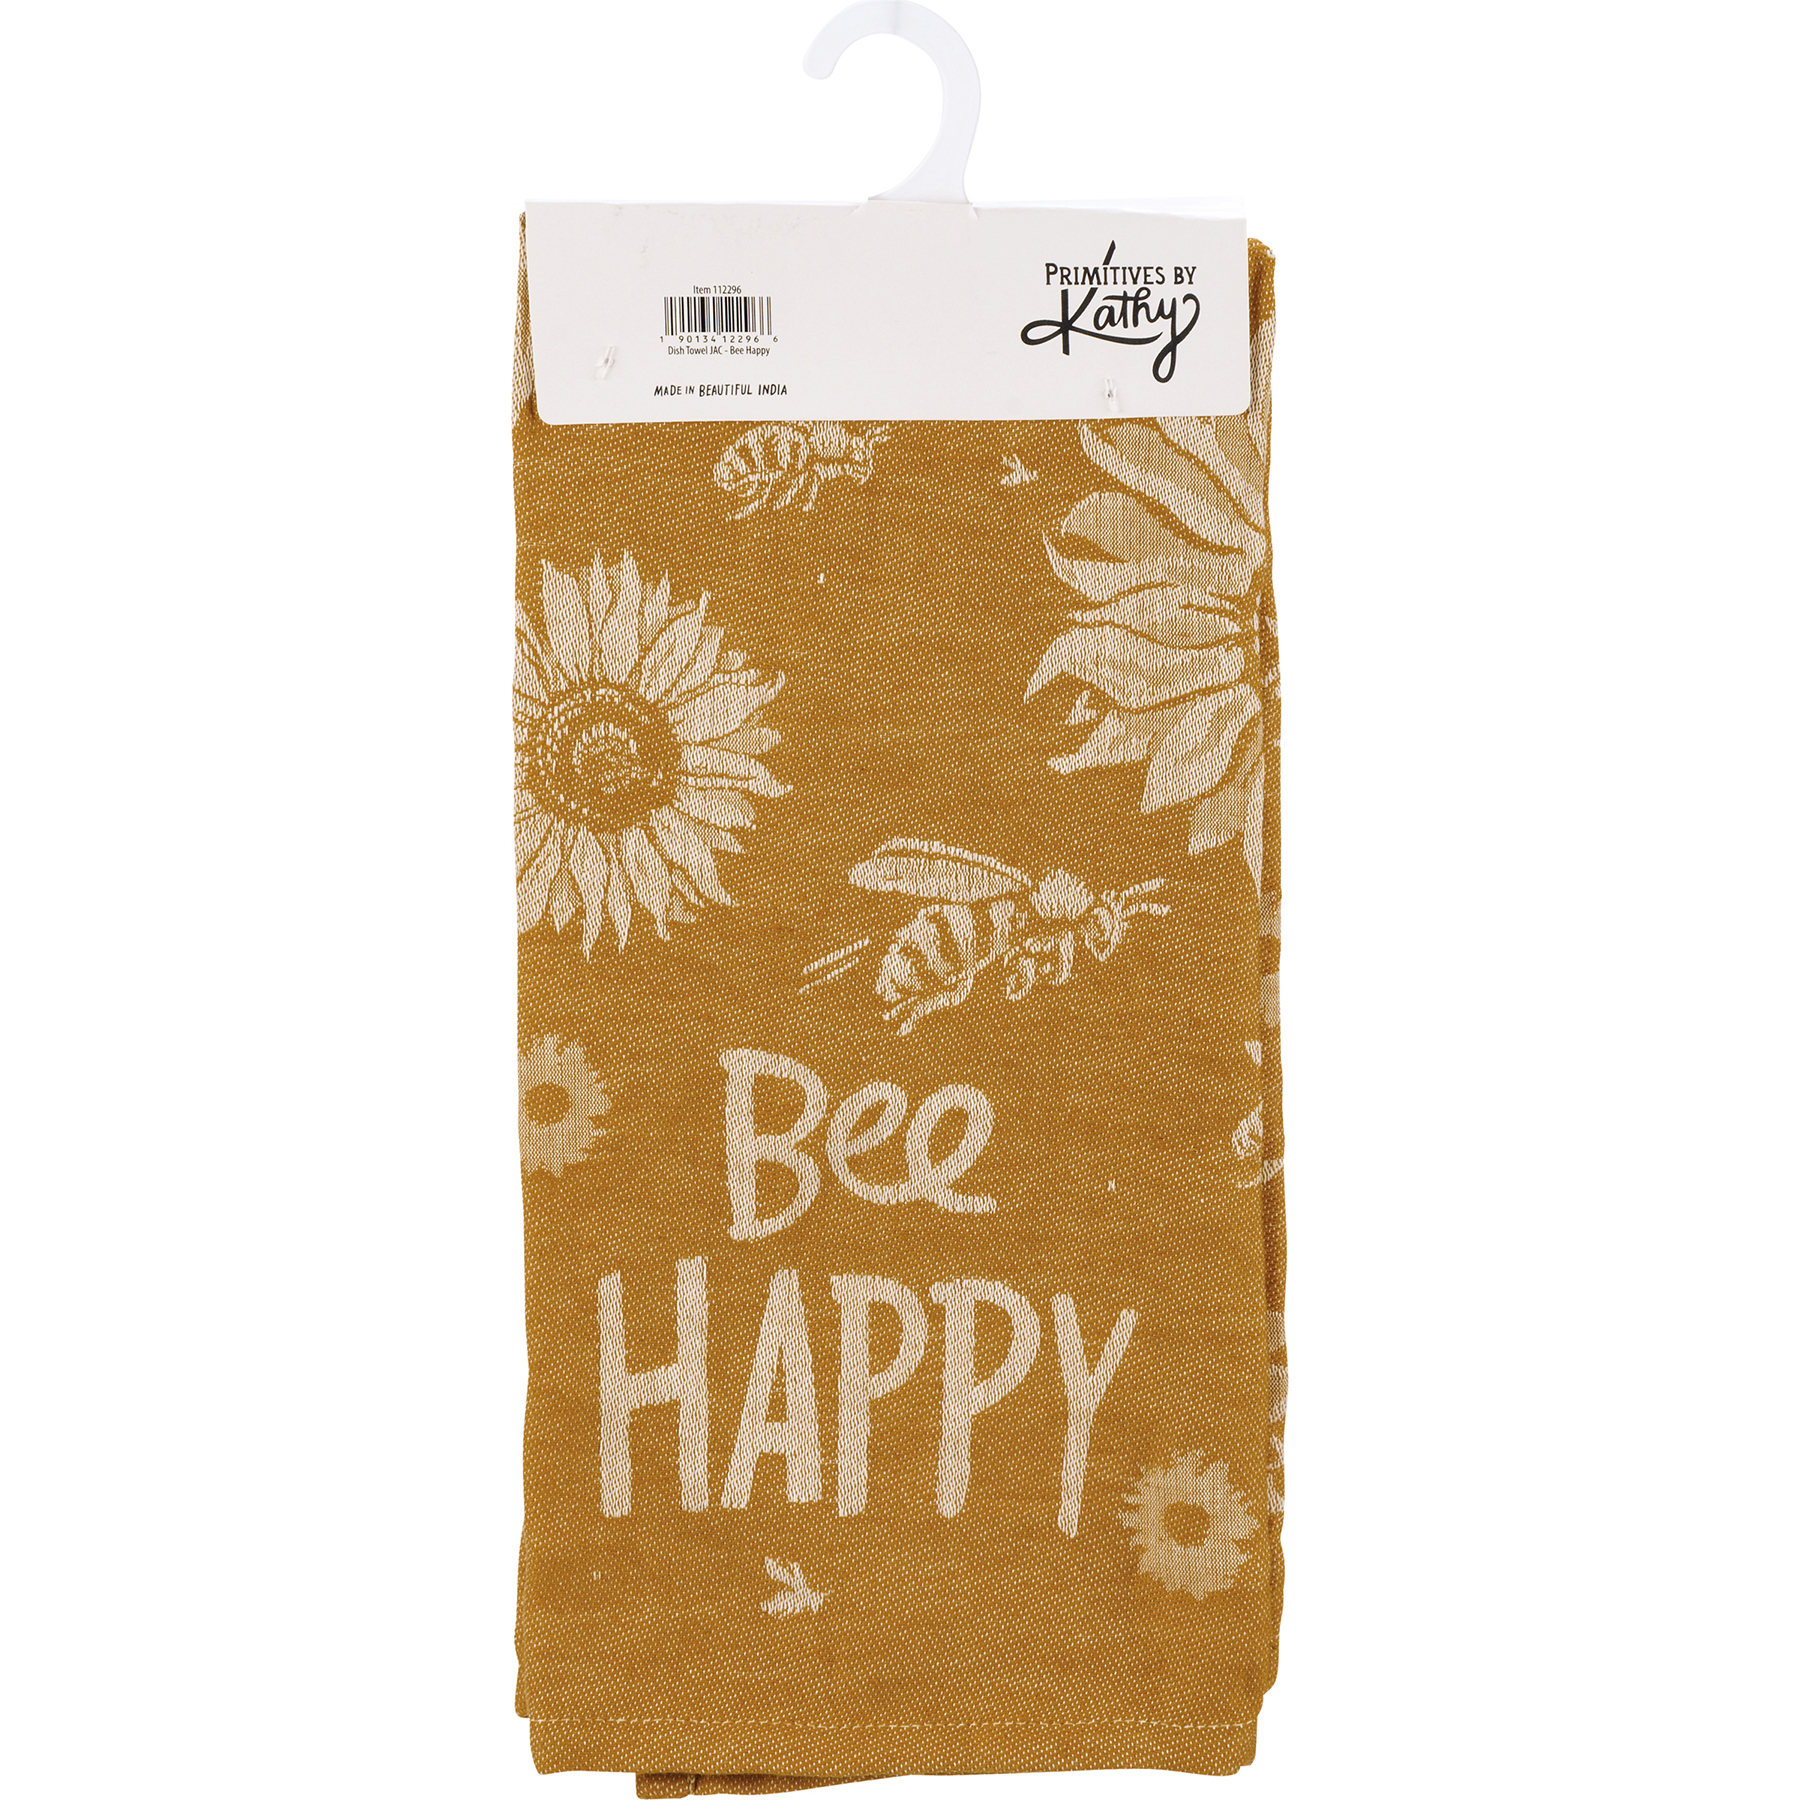 Primitives by Kathy Dish Towel - Bee Happy